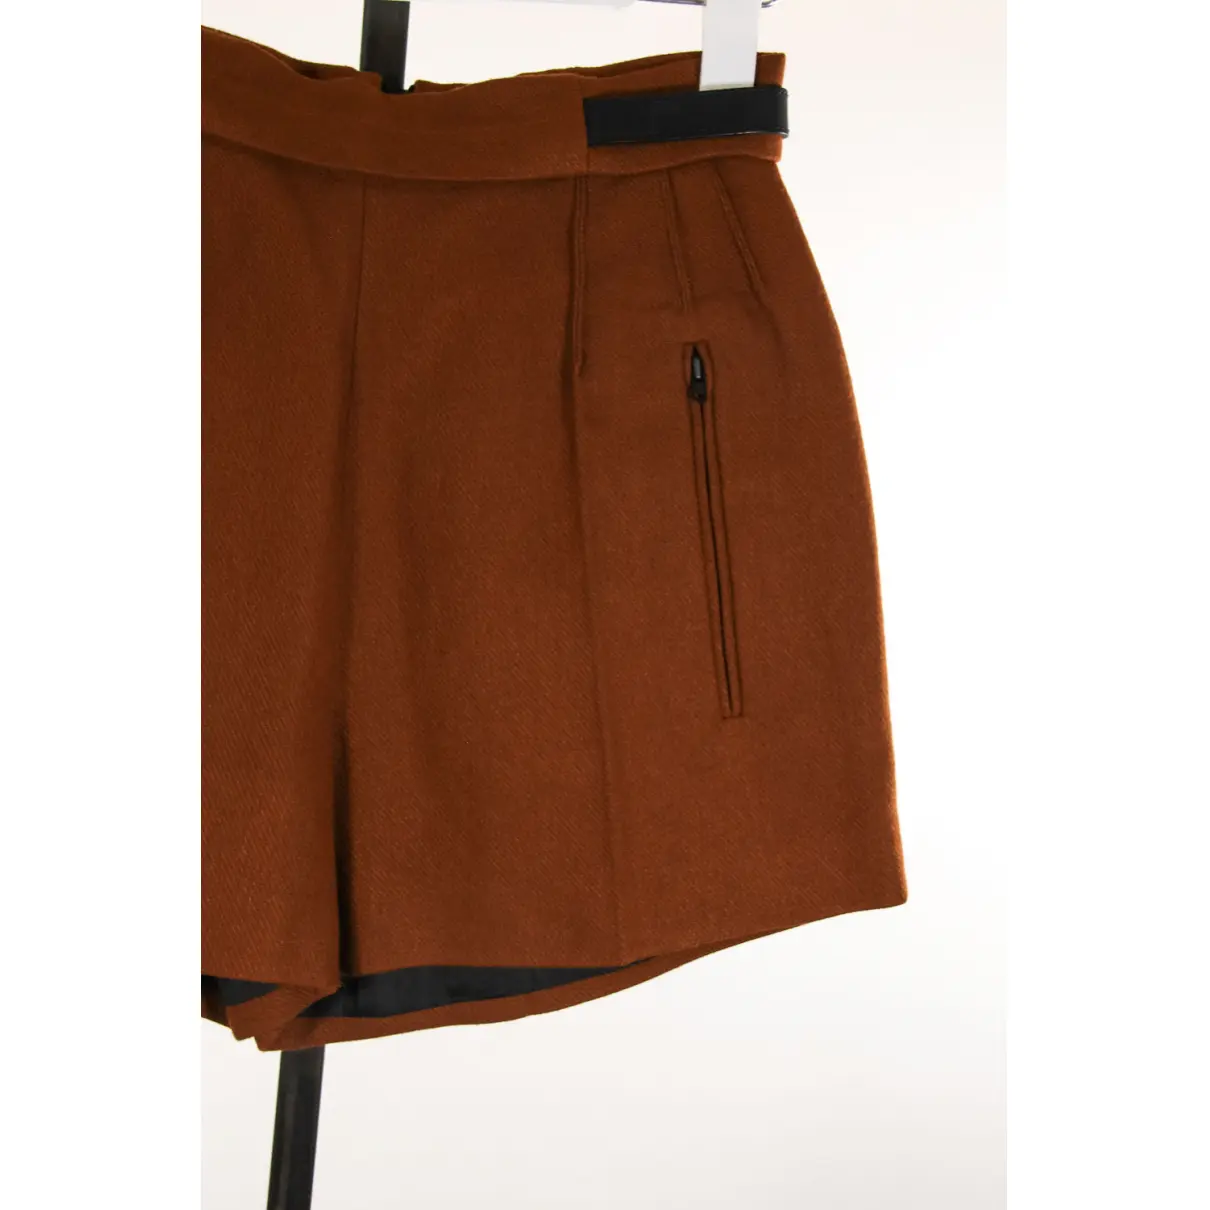 Buy The Kooples Skirt online